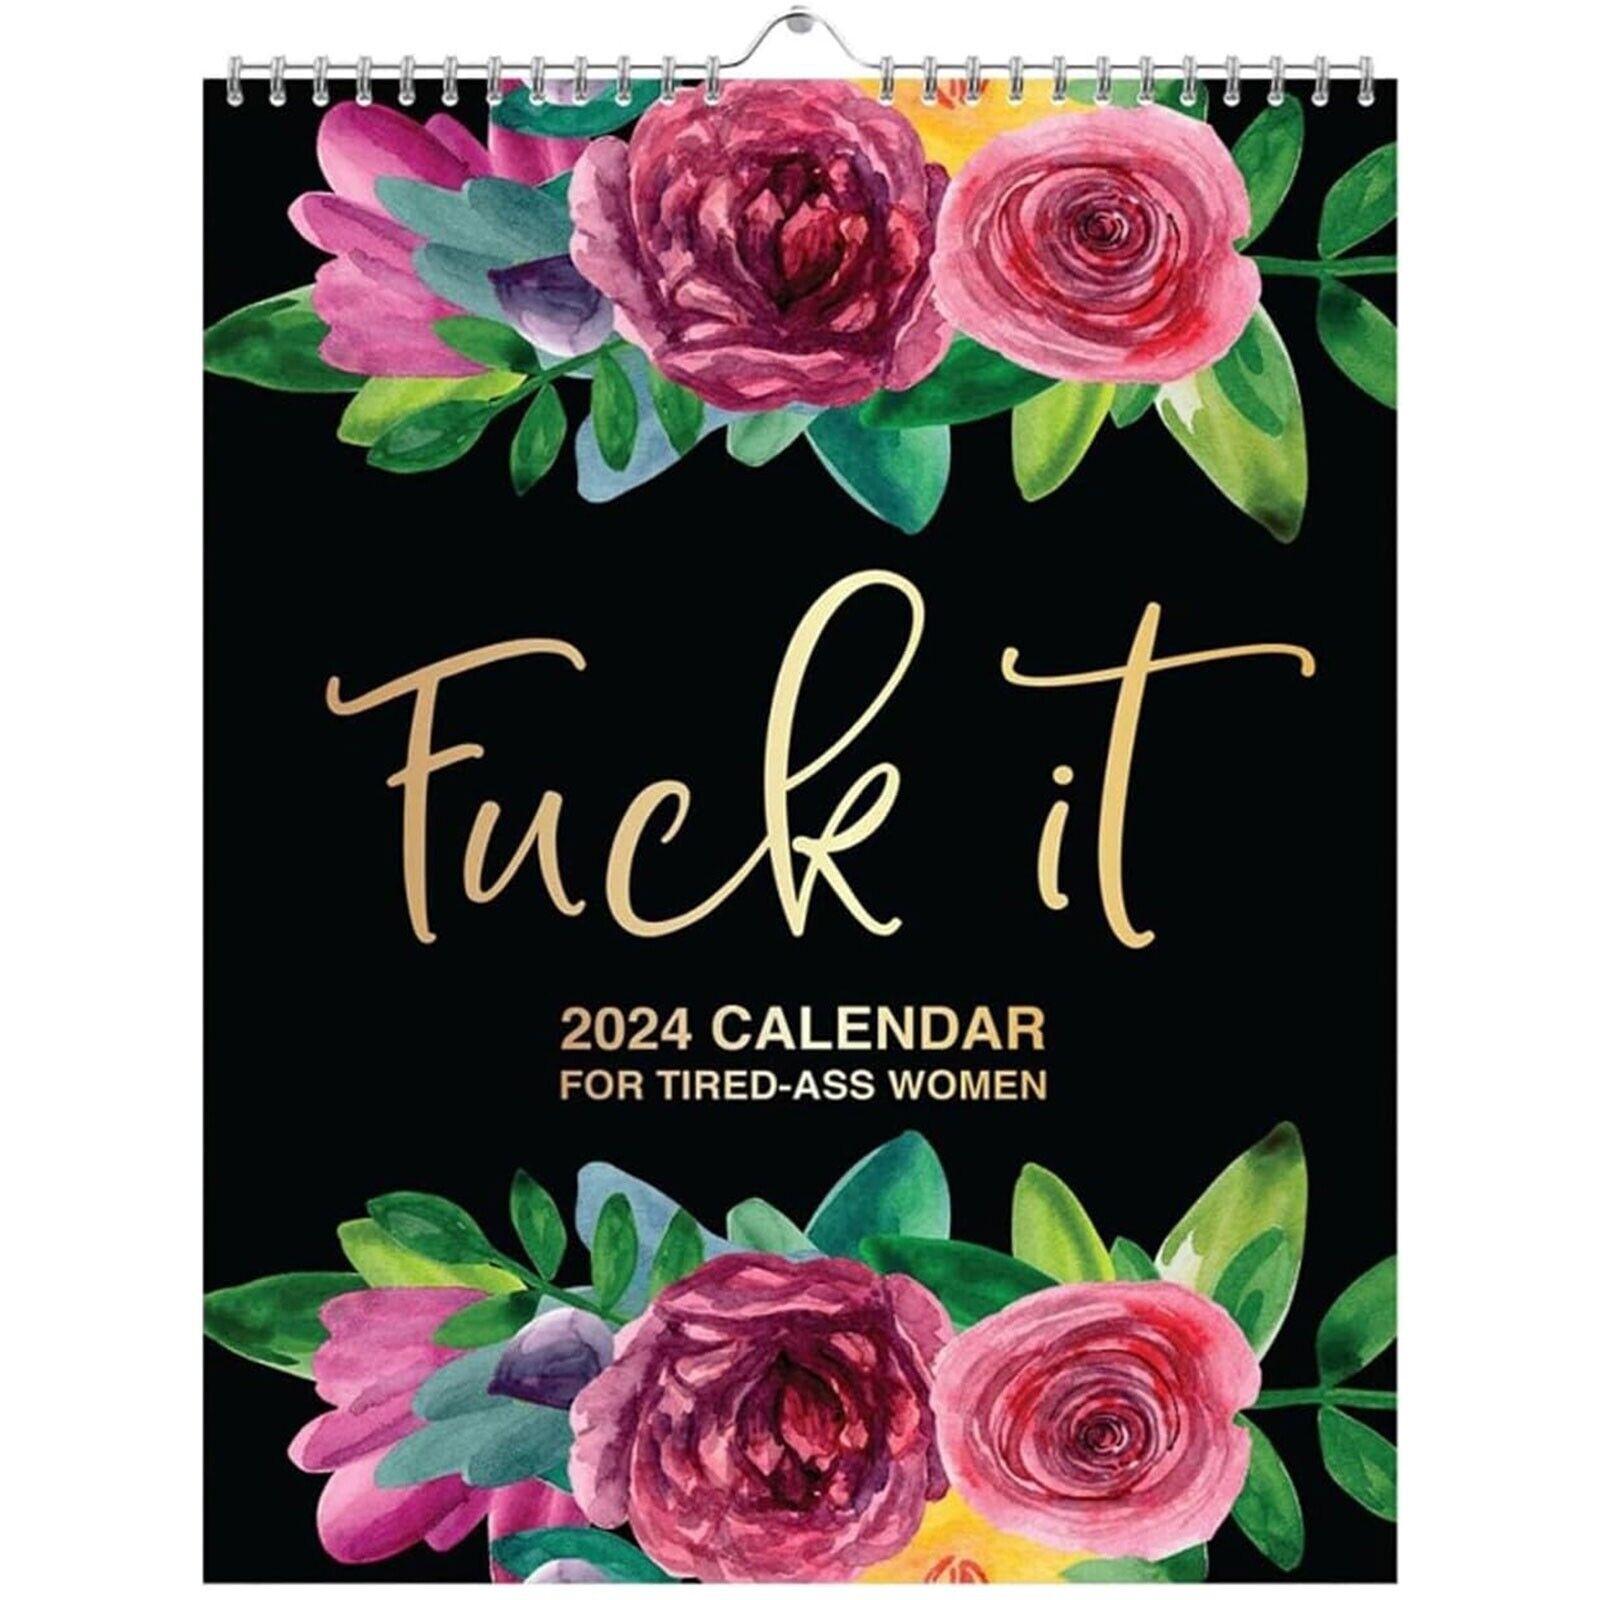 2024 Calendar For Tired-Ass Women - Buy 2 Free Shipping